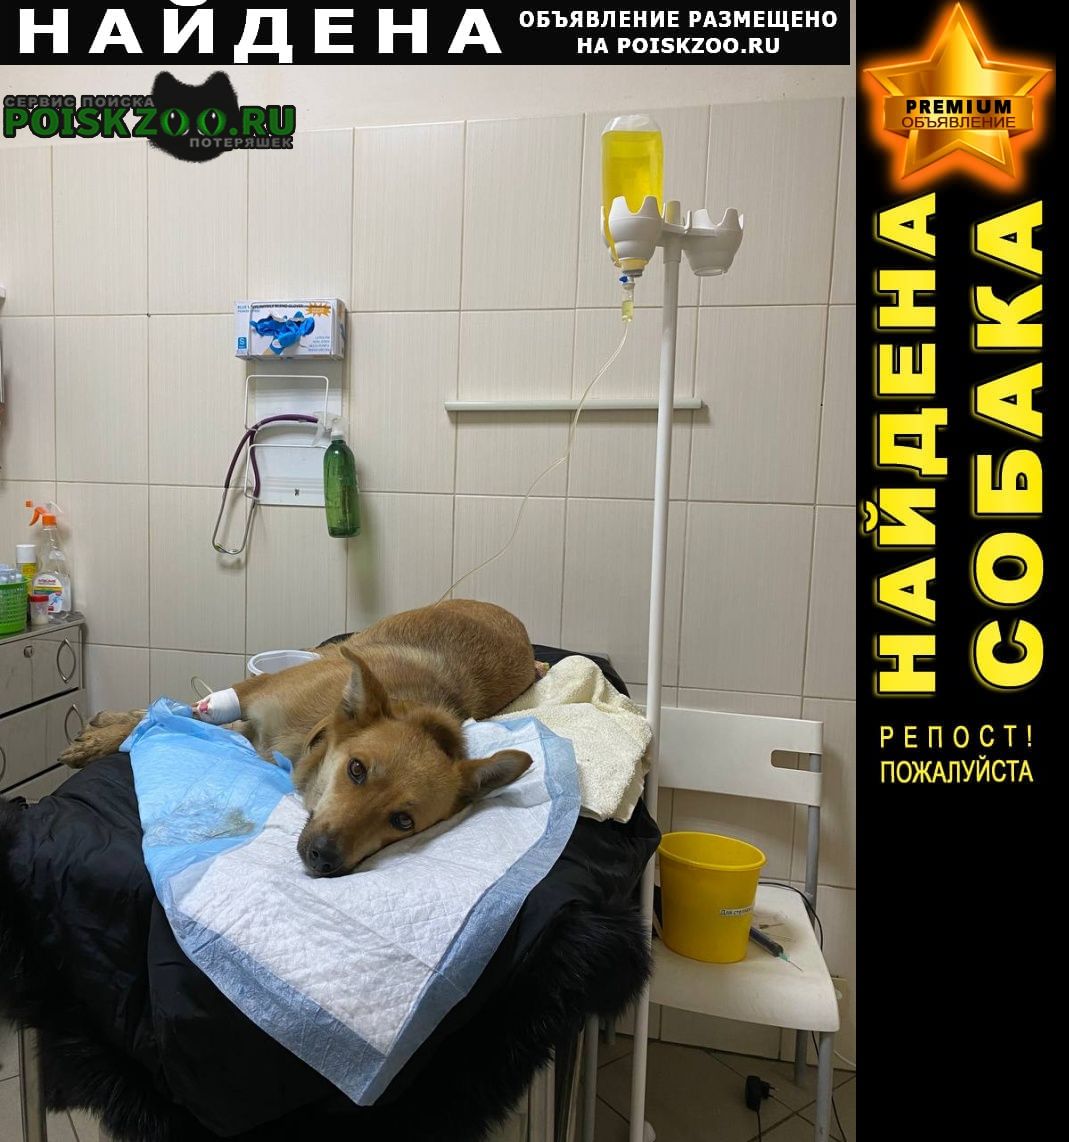 Найдена собака потеряшка Москва